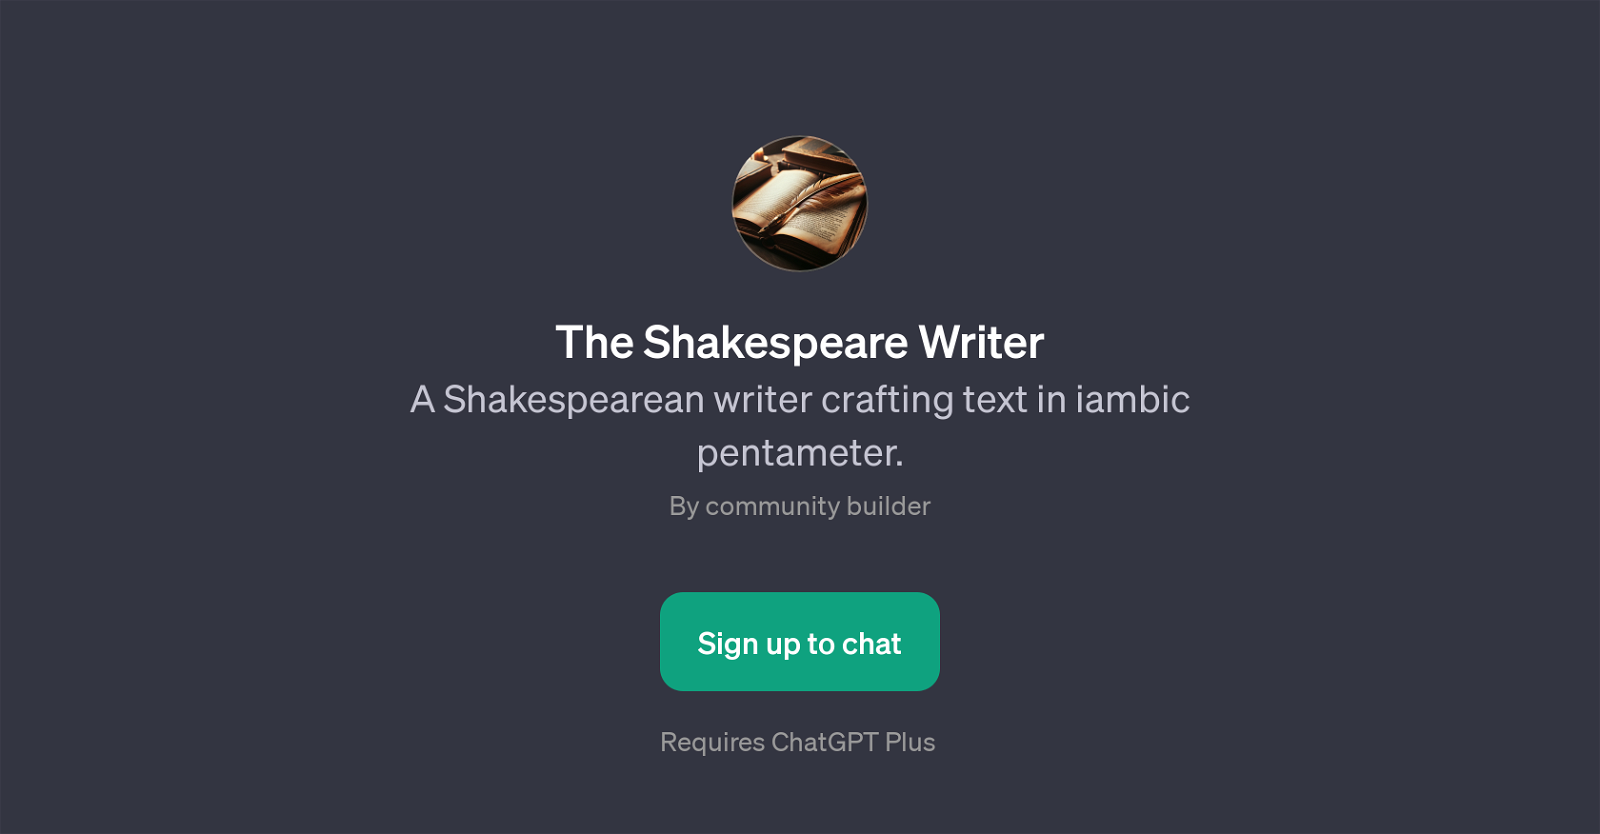 The Shakespeare Writer website